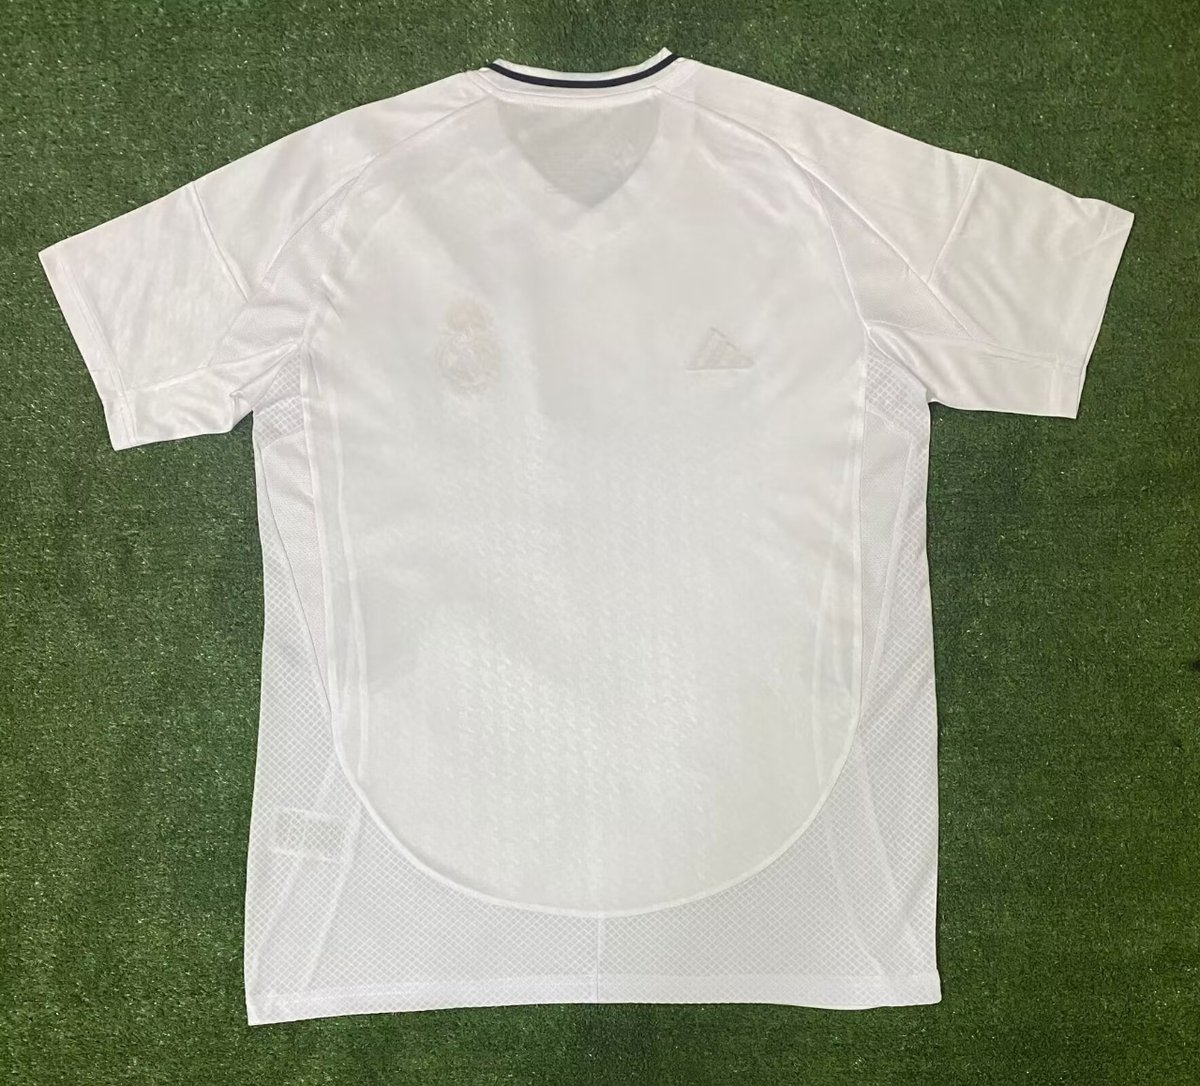 Nueva camiseta del Real Madrid temp 24/25

#realmadrid #madrid #viniciusjr #bellingham #futbol #camisetasdefutbol #equipacionesdeportivas #camiseta #viral #fyp #foryou #parati